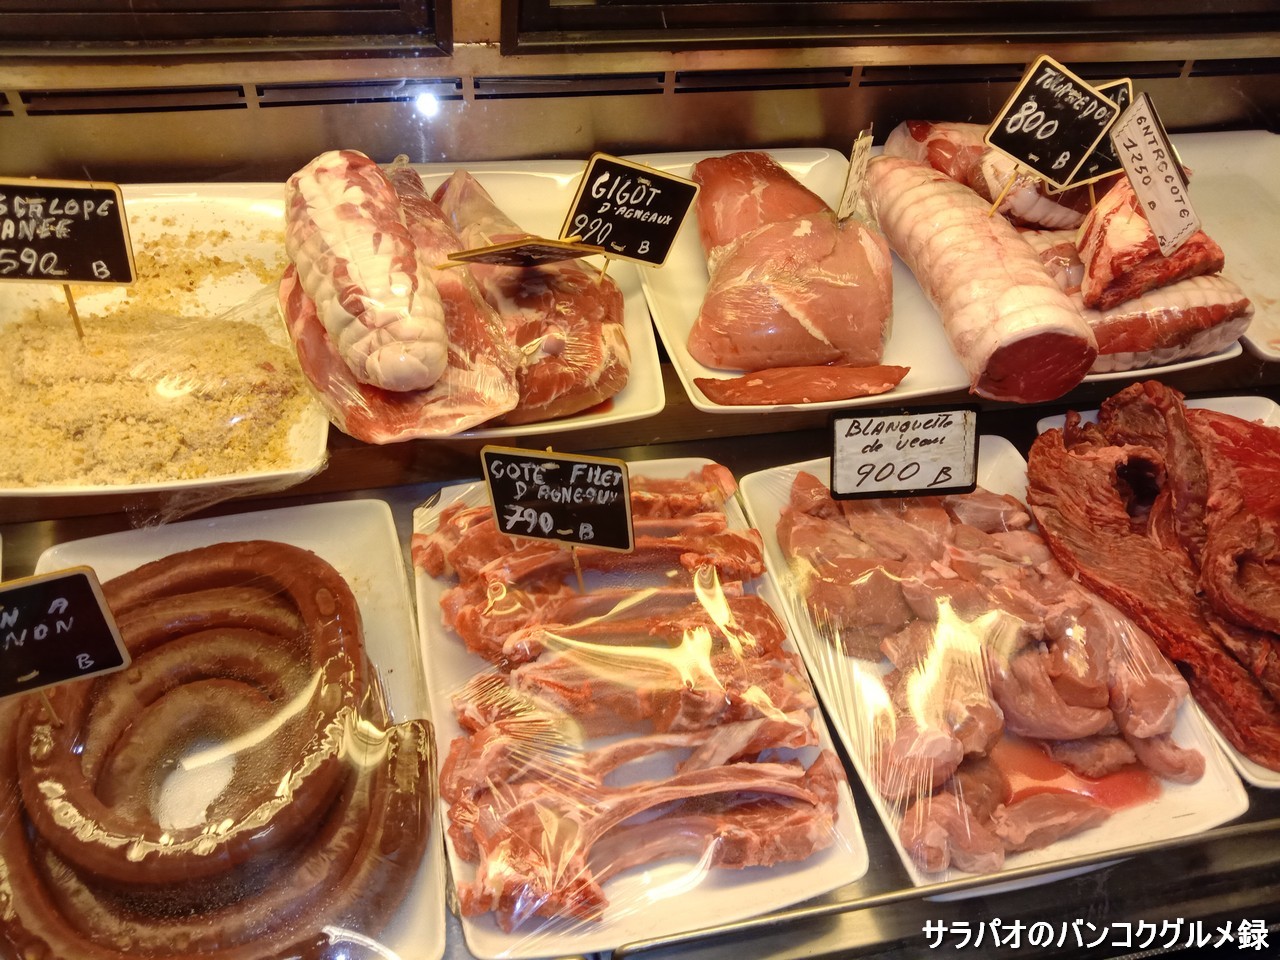 Gargantuaはレストランと同品質の肉を扱う精肉店　in　シーロム